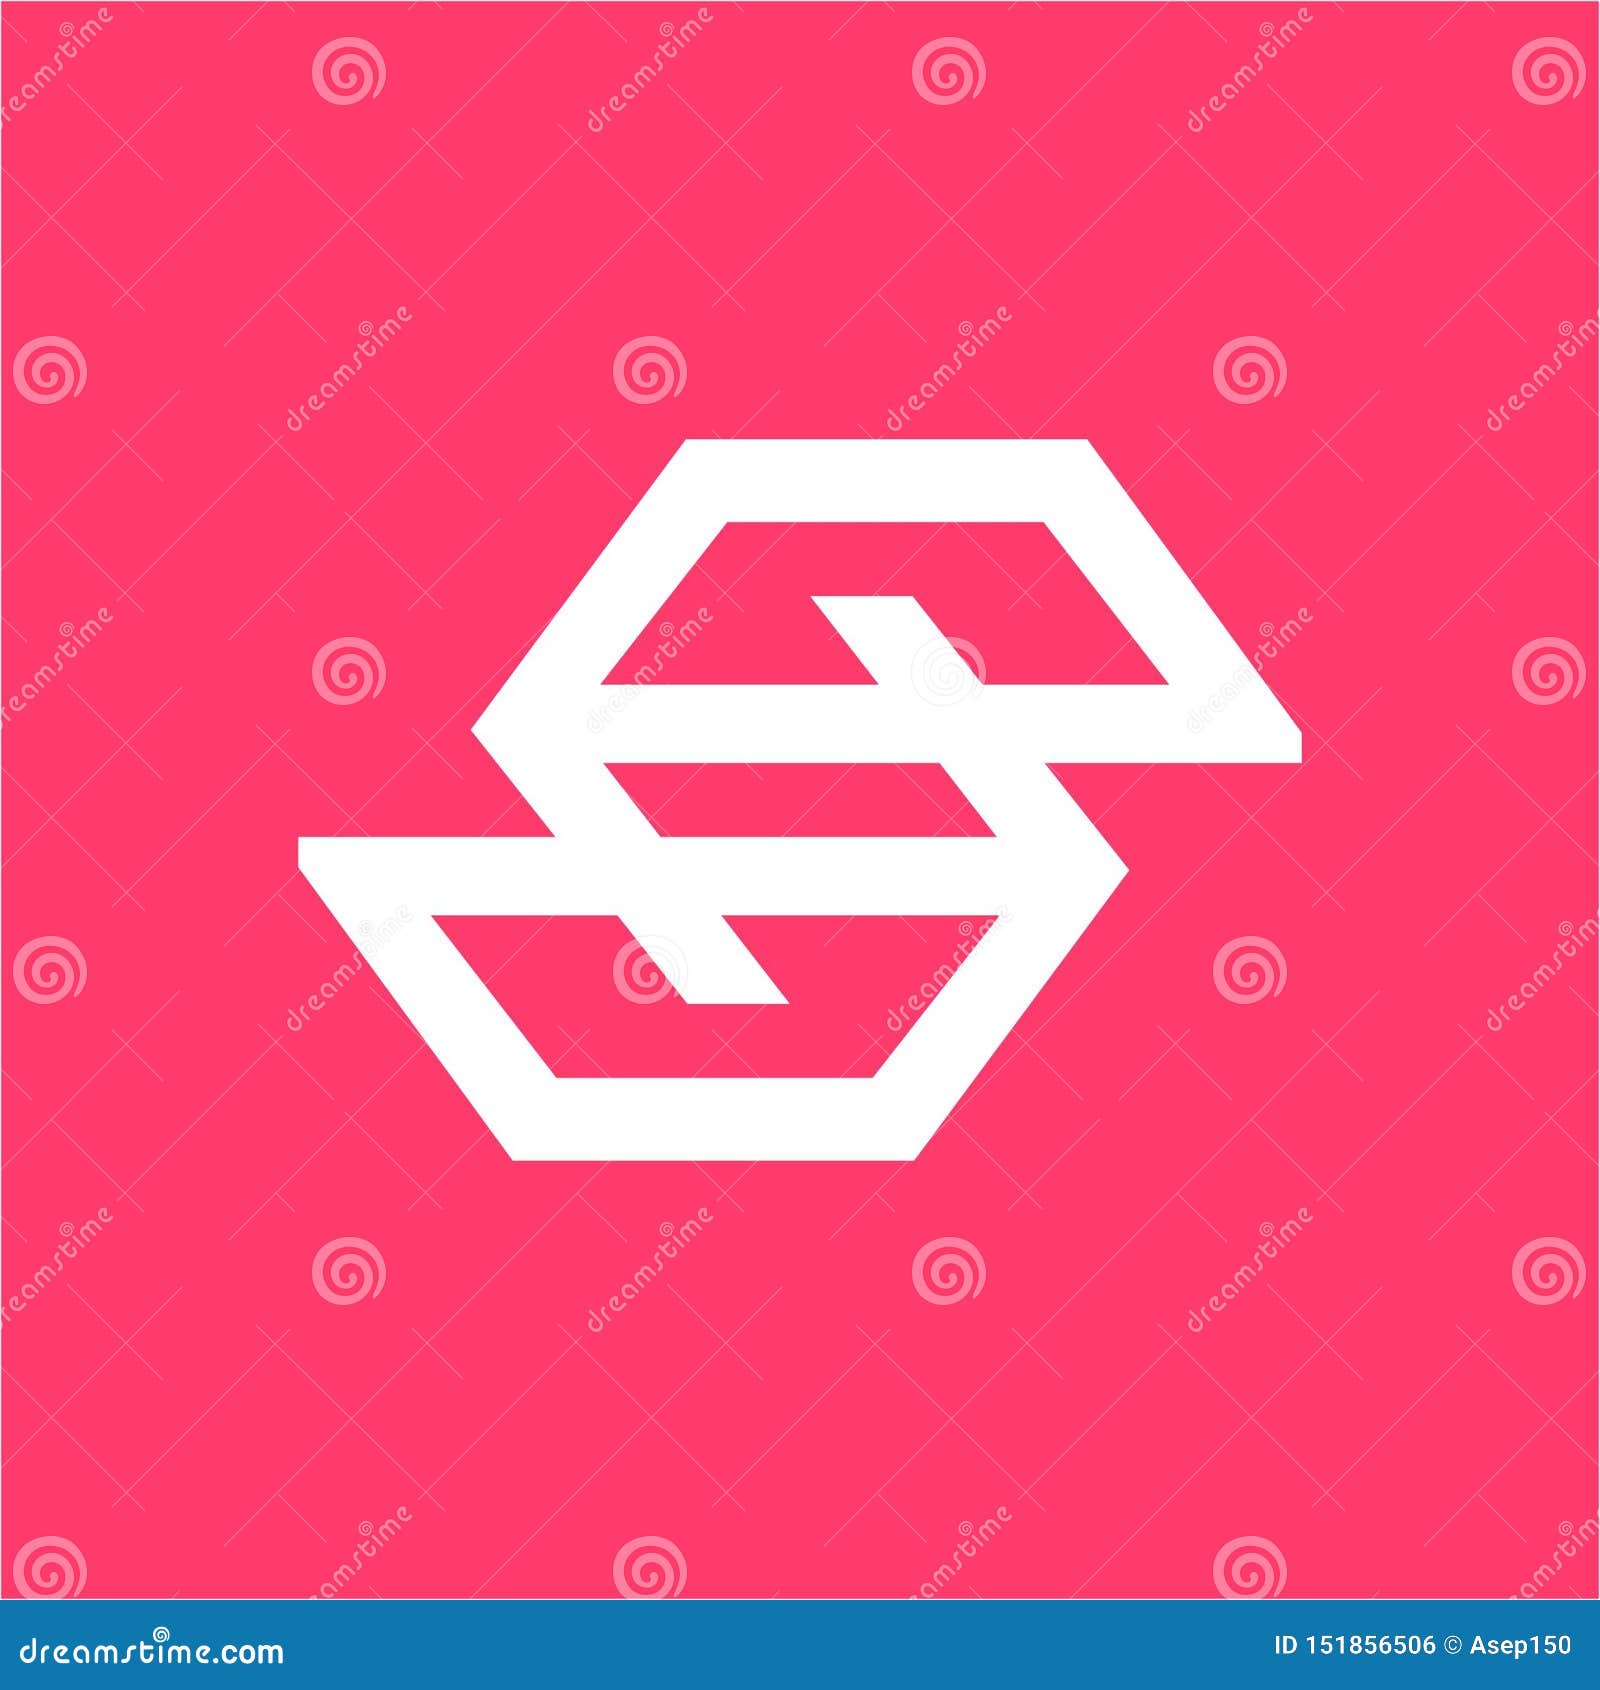 simple eg, ep. pe. ese, psp initials geometric company logo